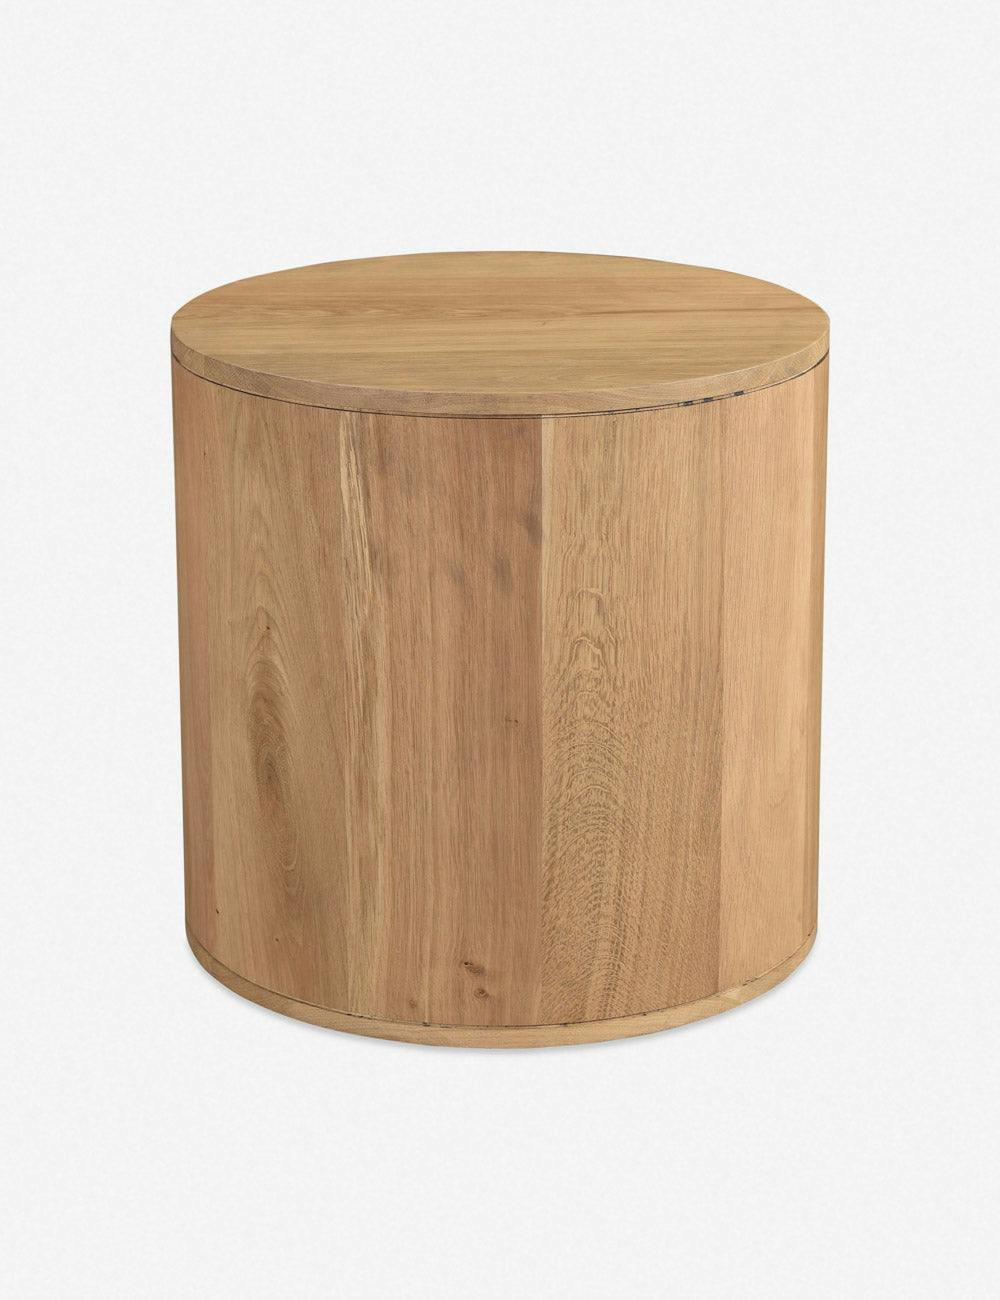 Scandinavian Solid Oak 2-Drawer Round Nightstand in Natural Brown